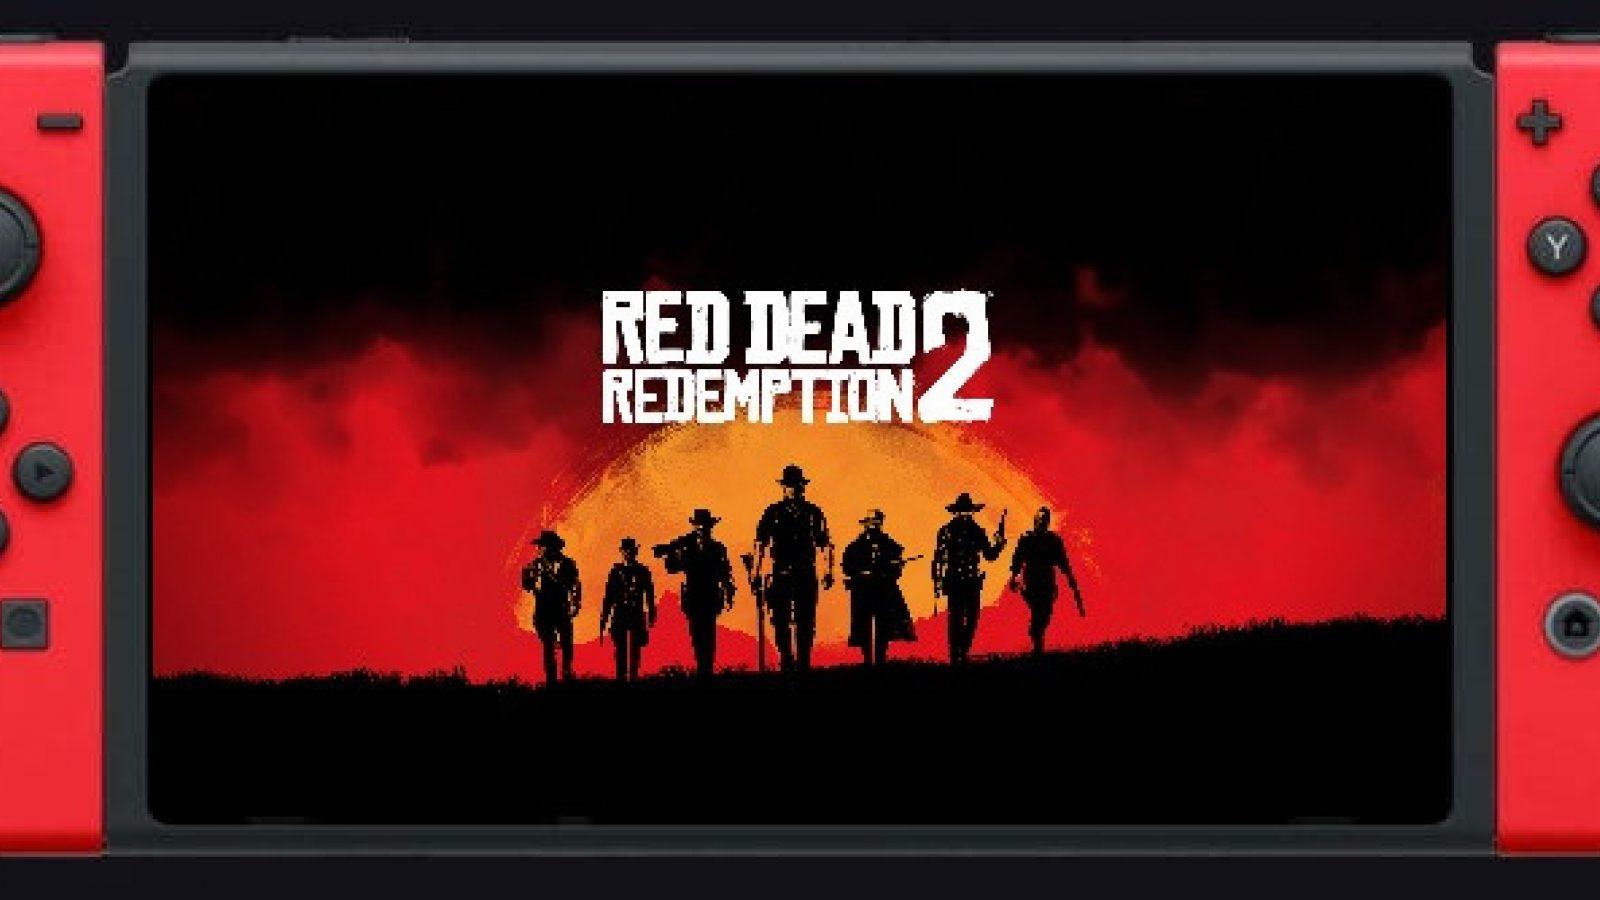 Red Dead Redemption - Nintendo Switch : Target